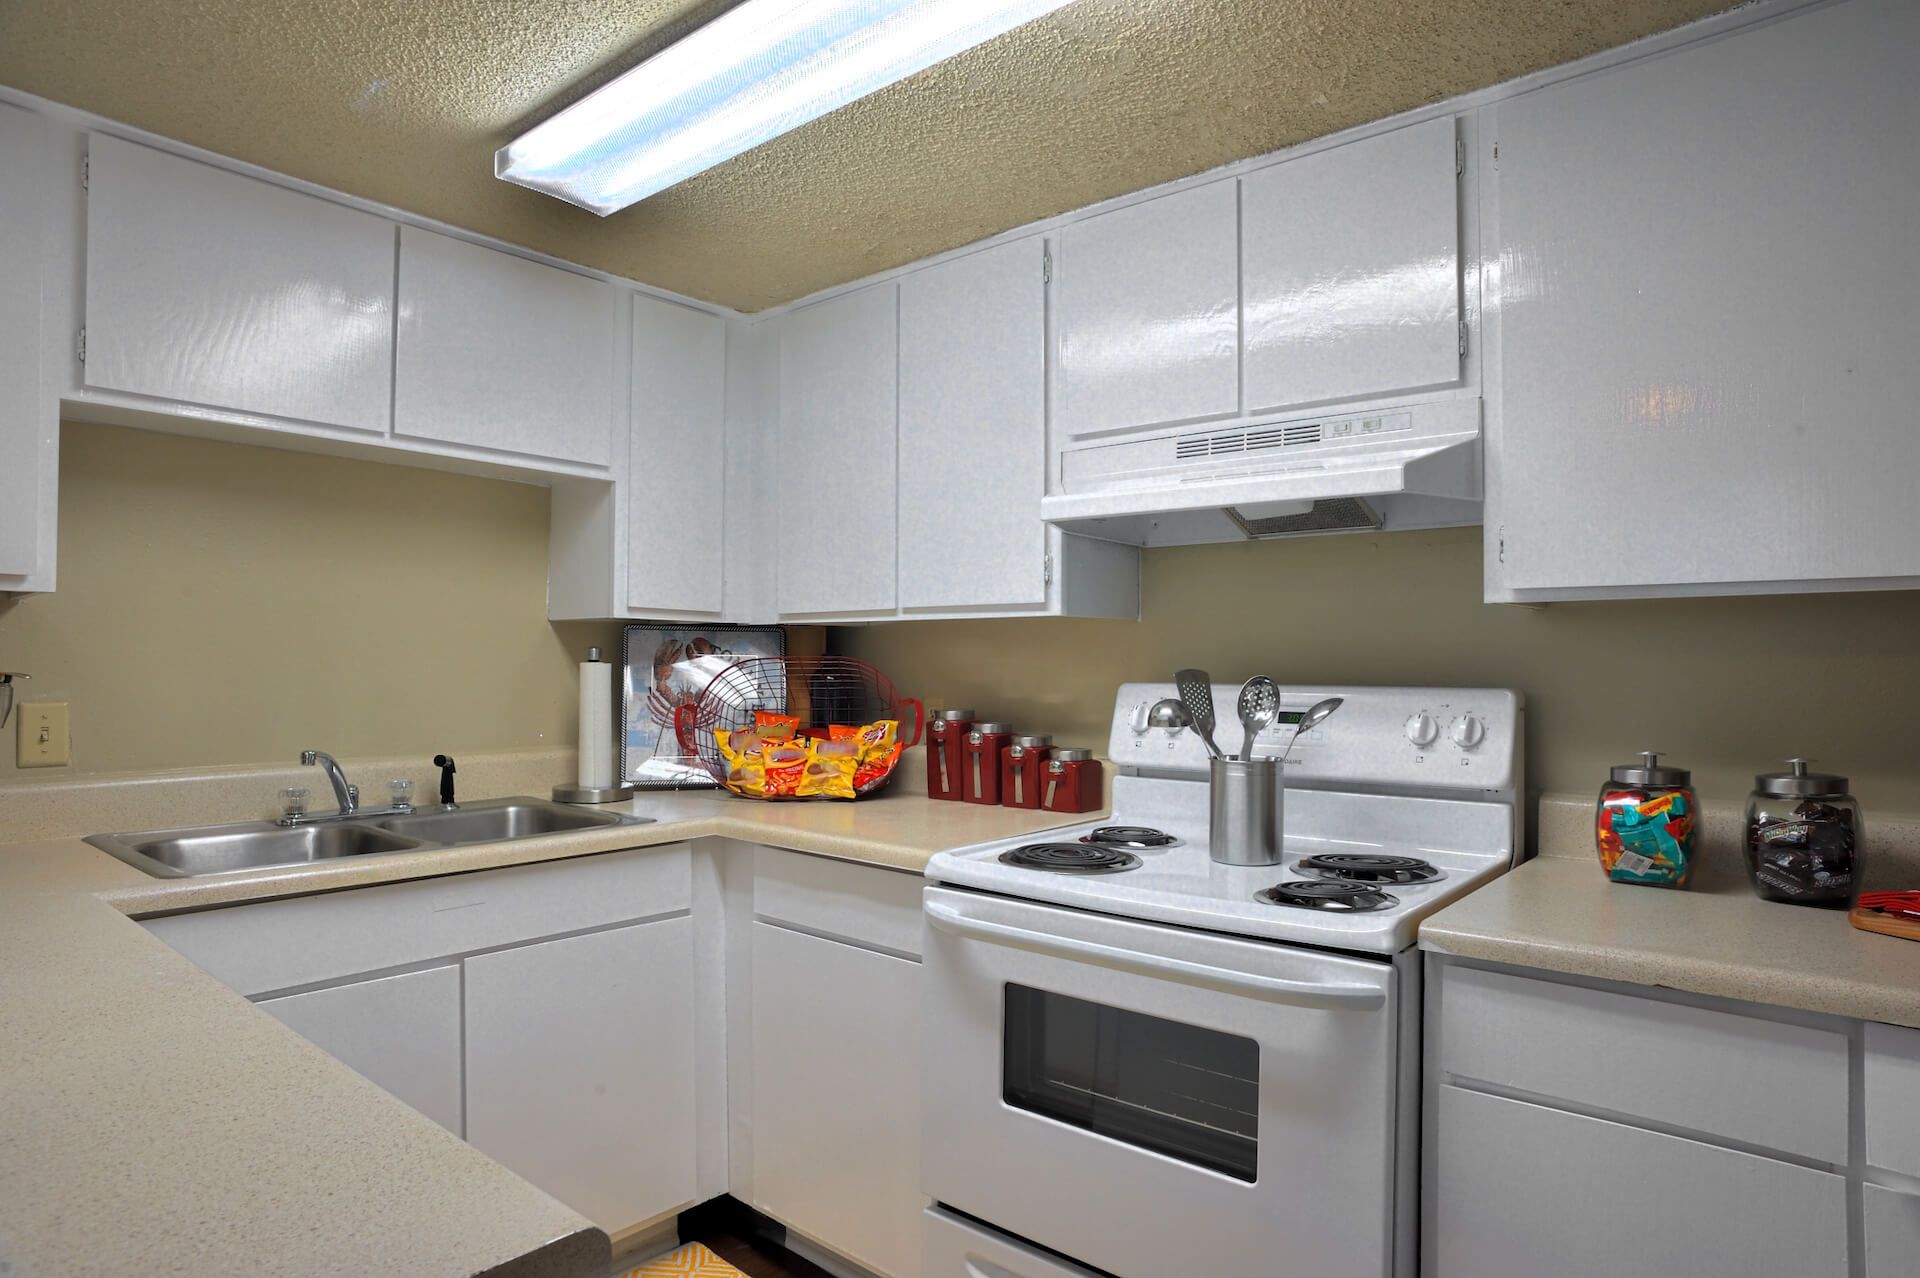 kitchen area at fairway view apartments